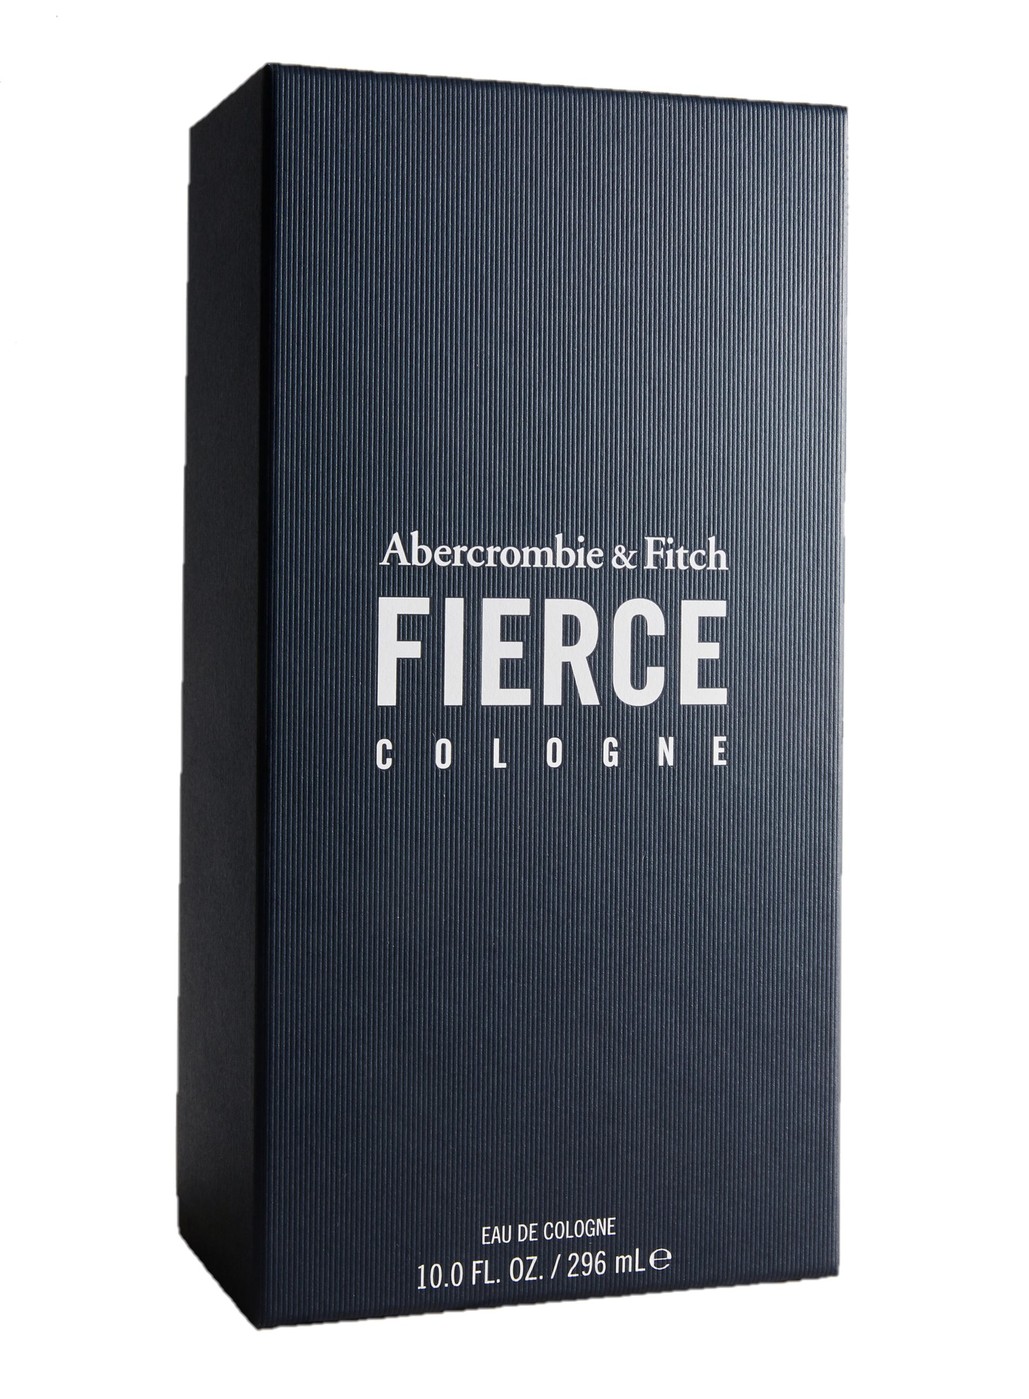 Парфюм Abercrombie & Fitch Fierce cologne 296 мл, 296 мл, 296 мл